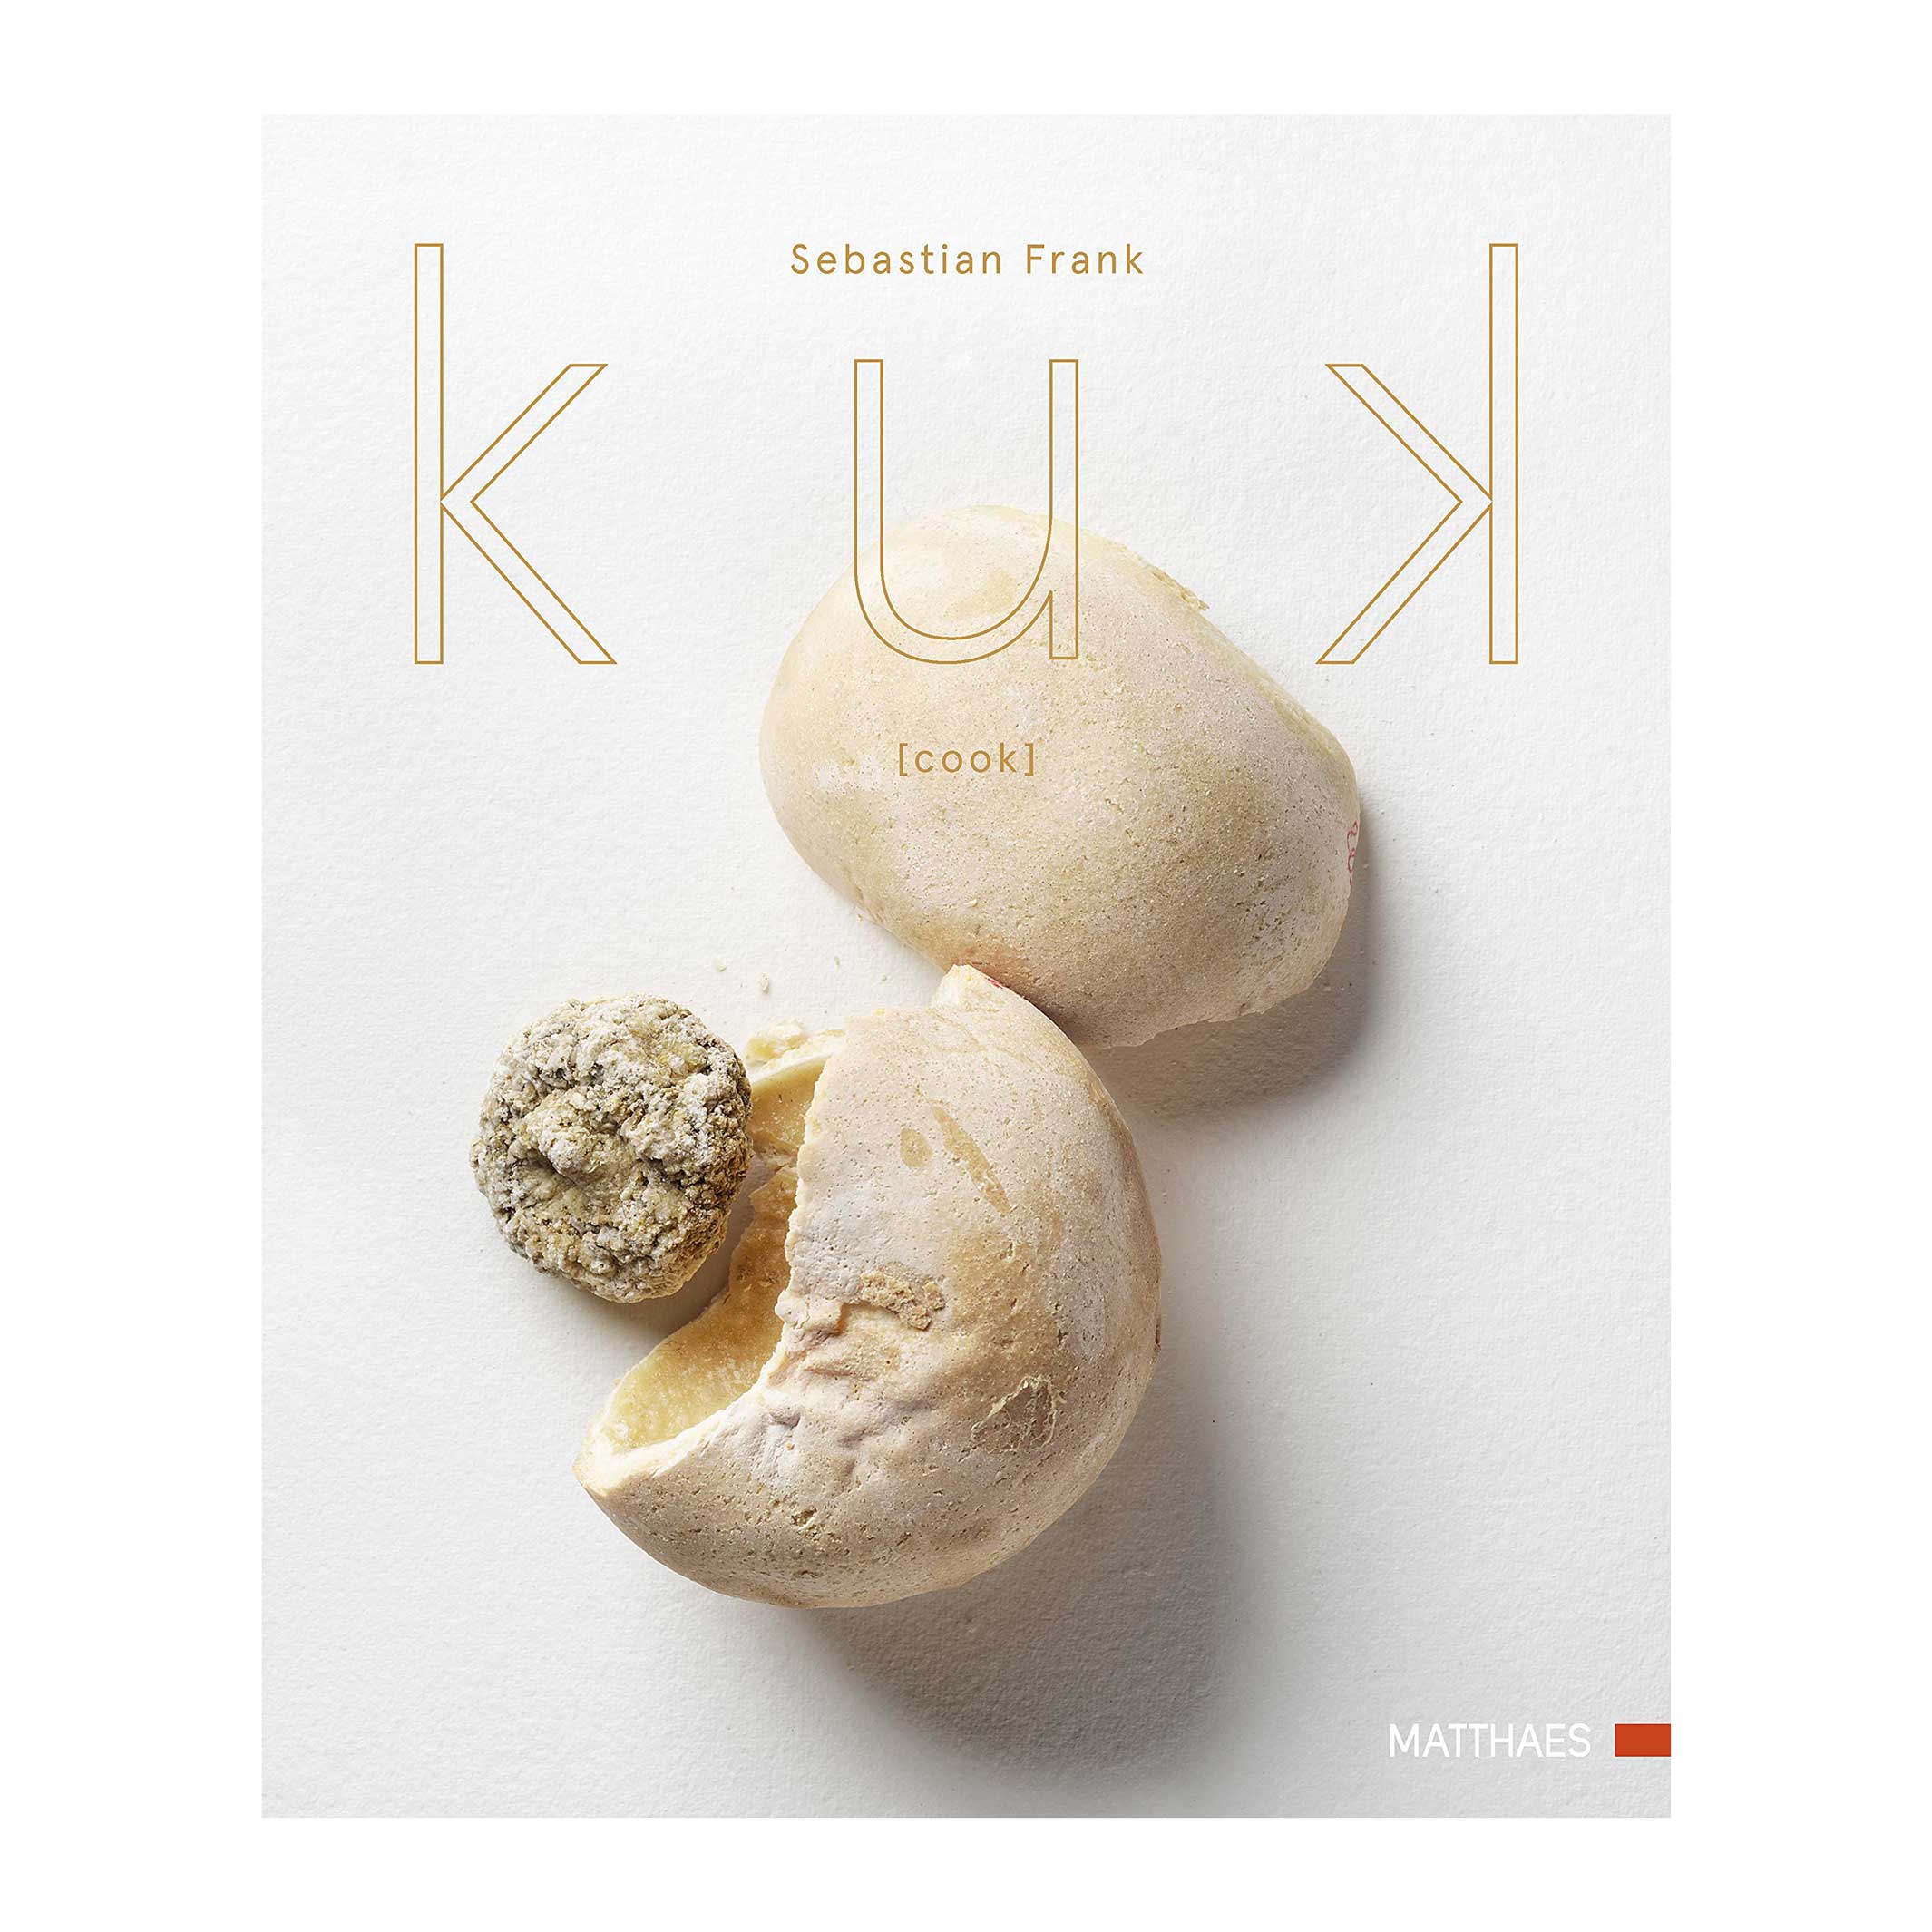 kuk [cook] | KOCHBUCH von Sebastian Frank  | DK Verlag